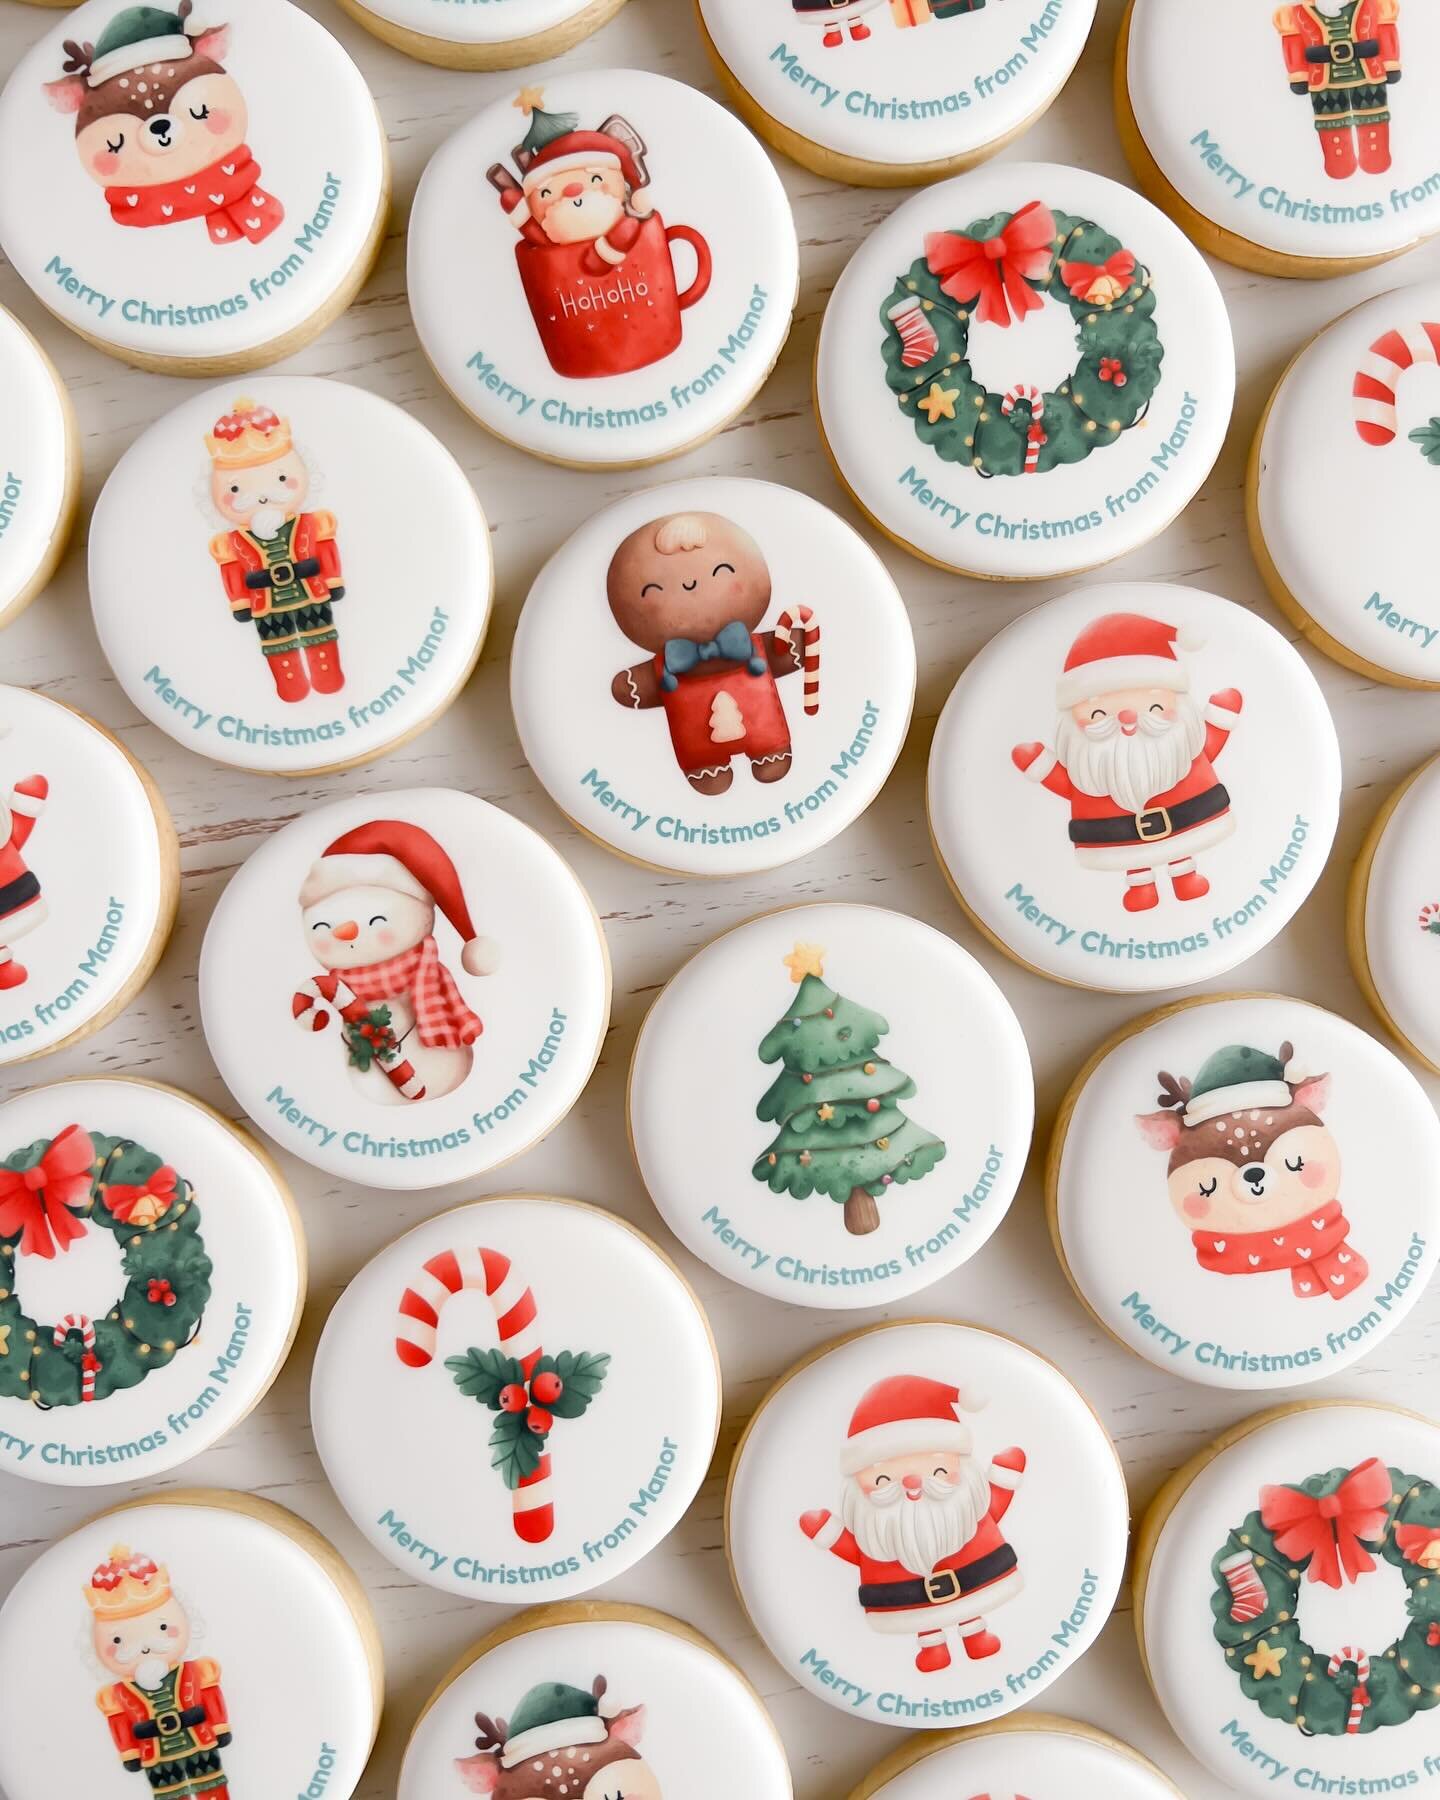 Merry Christmas! 🎅🏻🎄

Wishing you hope, peace and lots of Christmas cookies this holiday season! 😉❤️

________________________

#merrychristmas #christmas #christmascookies #christmaspresent #xmascookies #xmaspresent #xmas #corporatecookies #logo